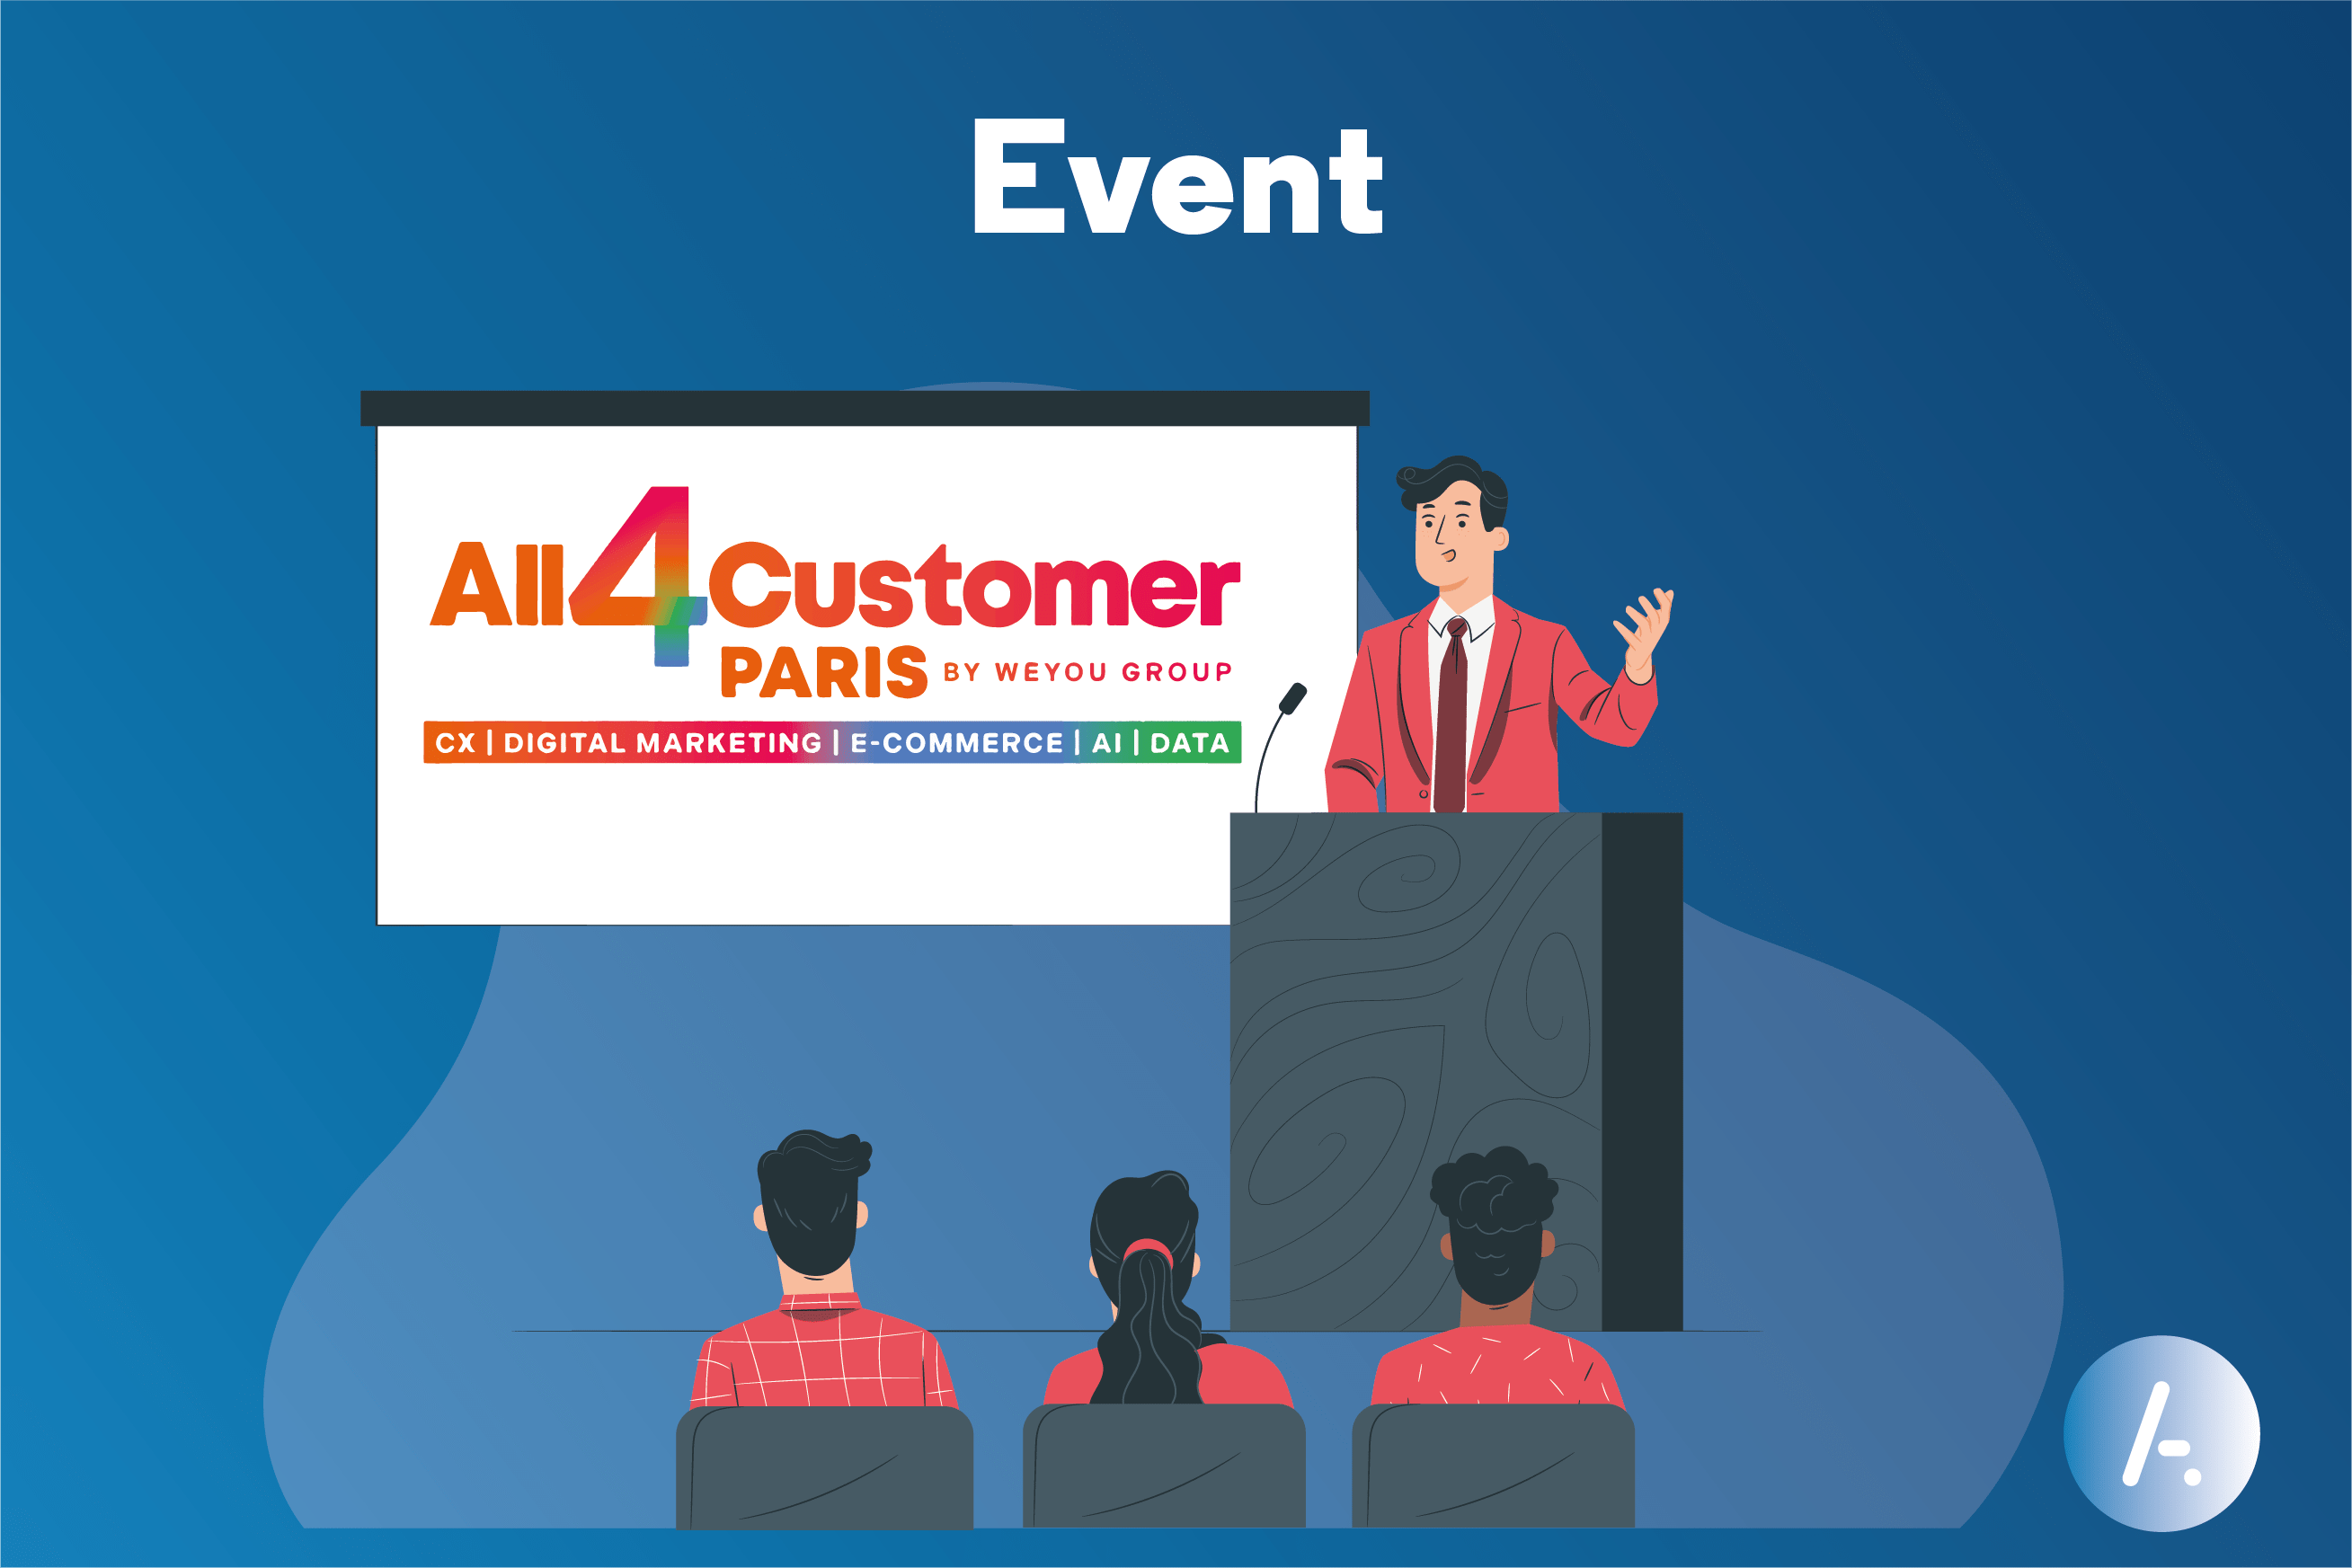 All 4 Customer - Event